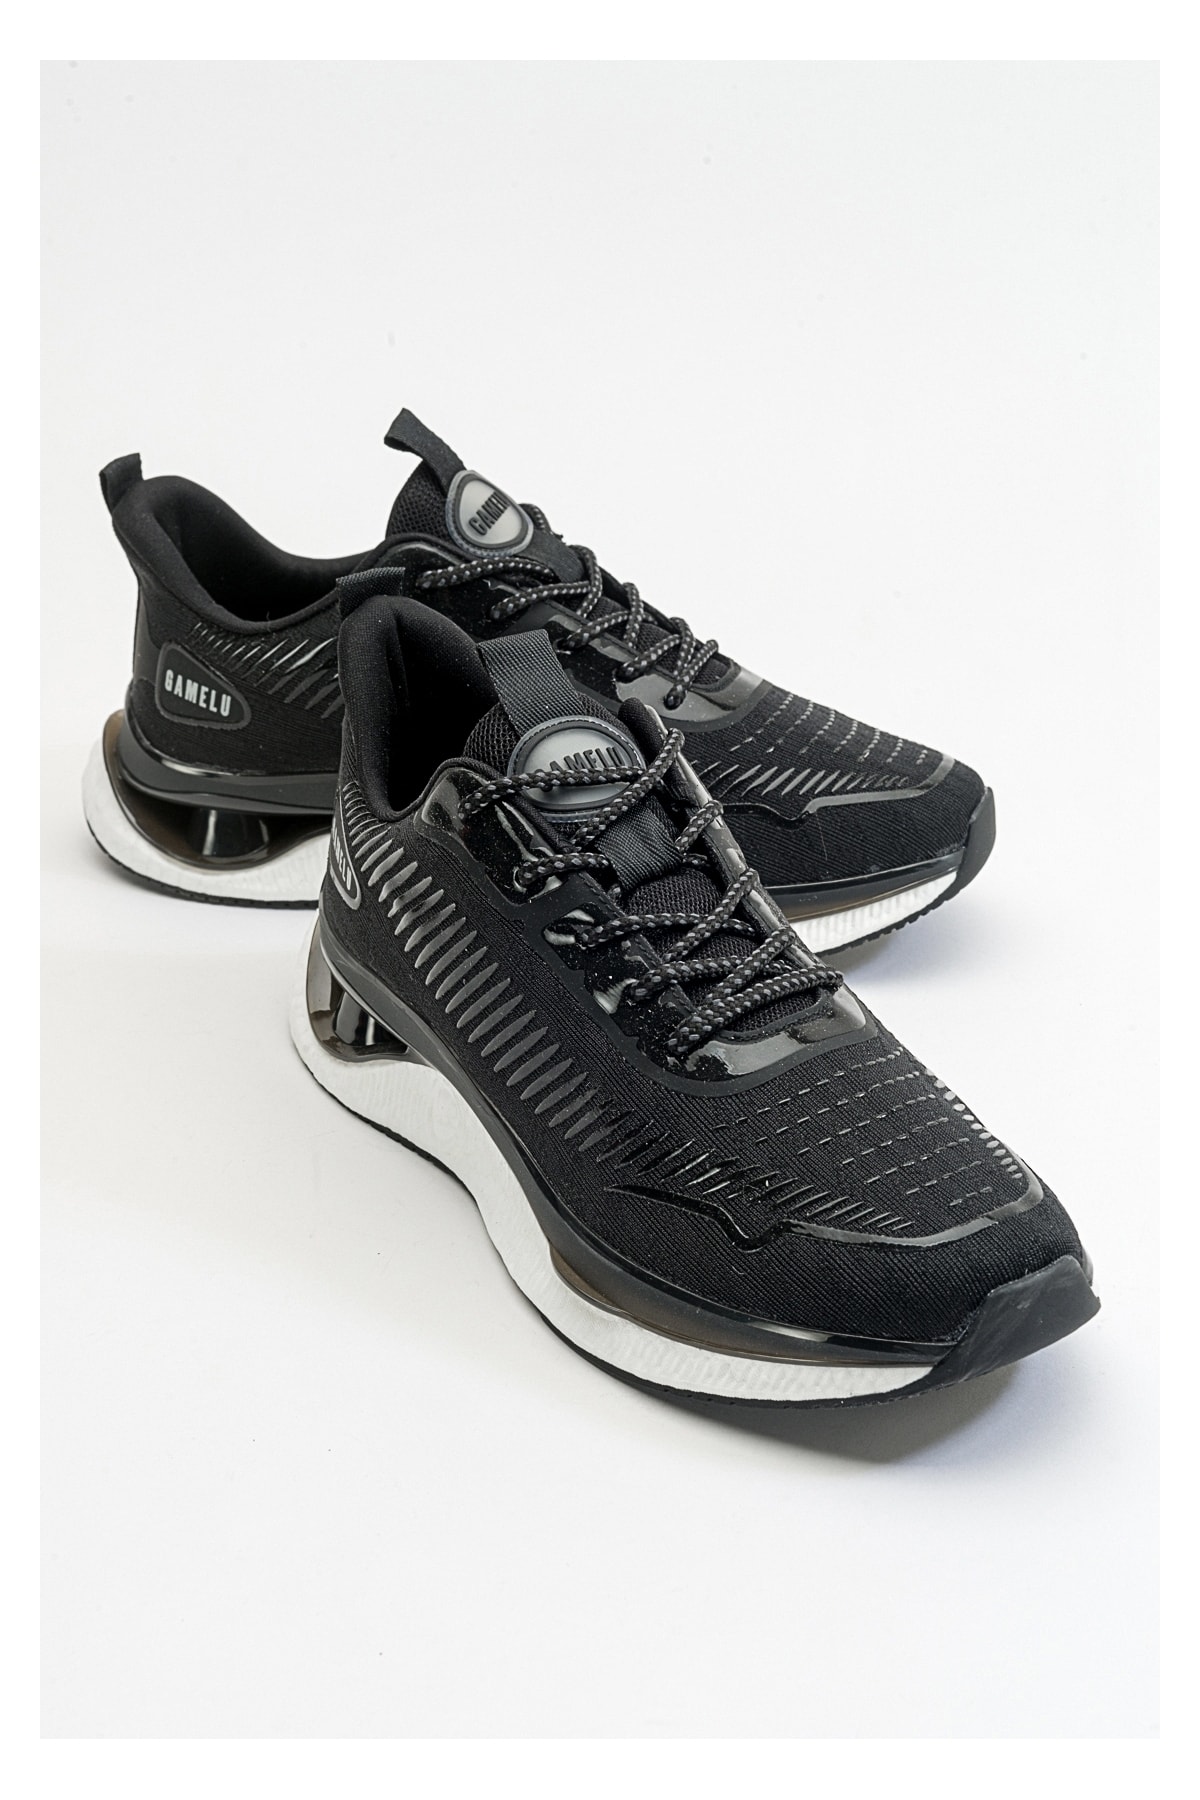 LuviShoes Stark Black Men's Sports Shoes